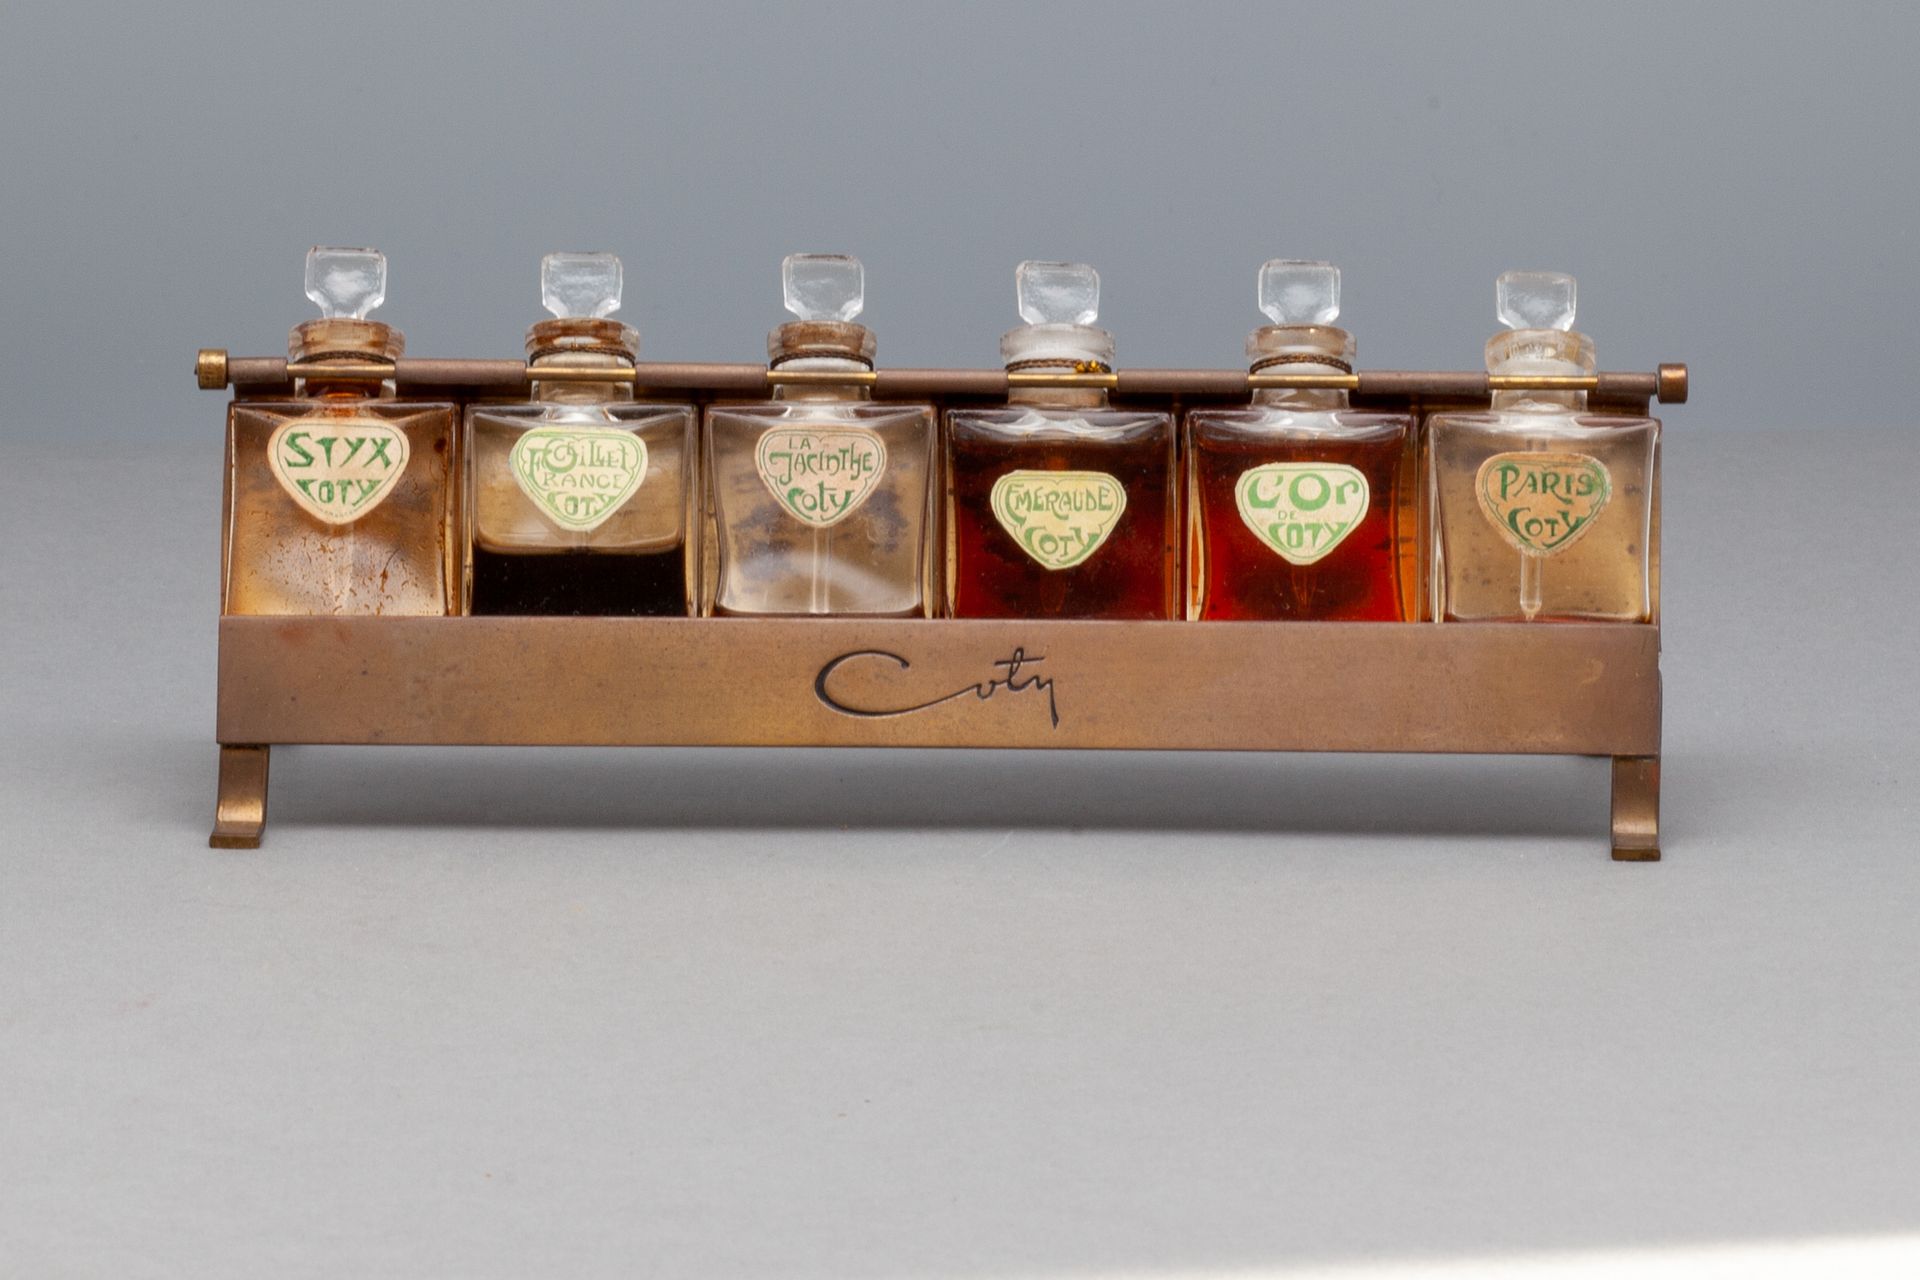 COTY Expositor metálico que contiene seis botellas COTY: "Styx", "Œillet", "Jaci&hellip;